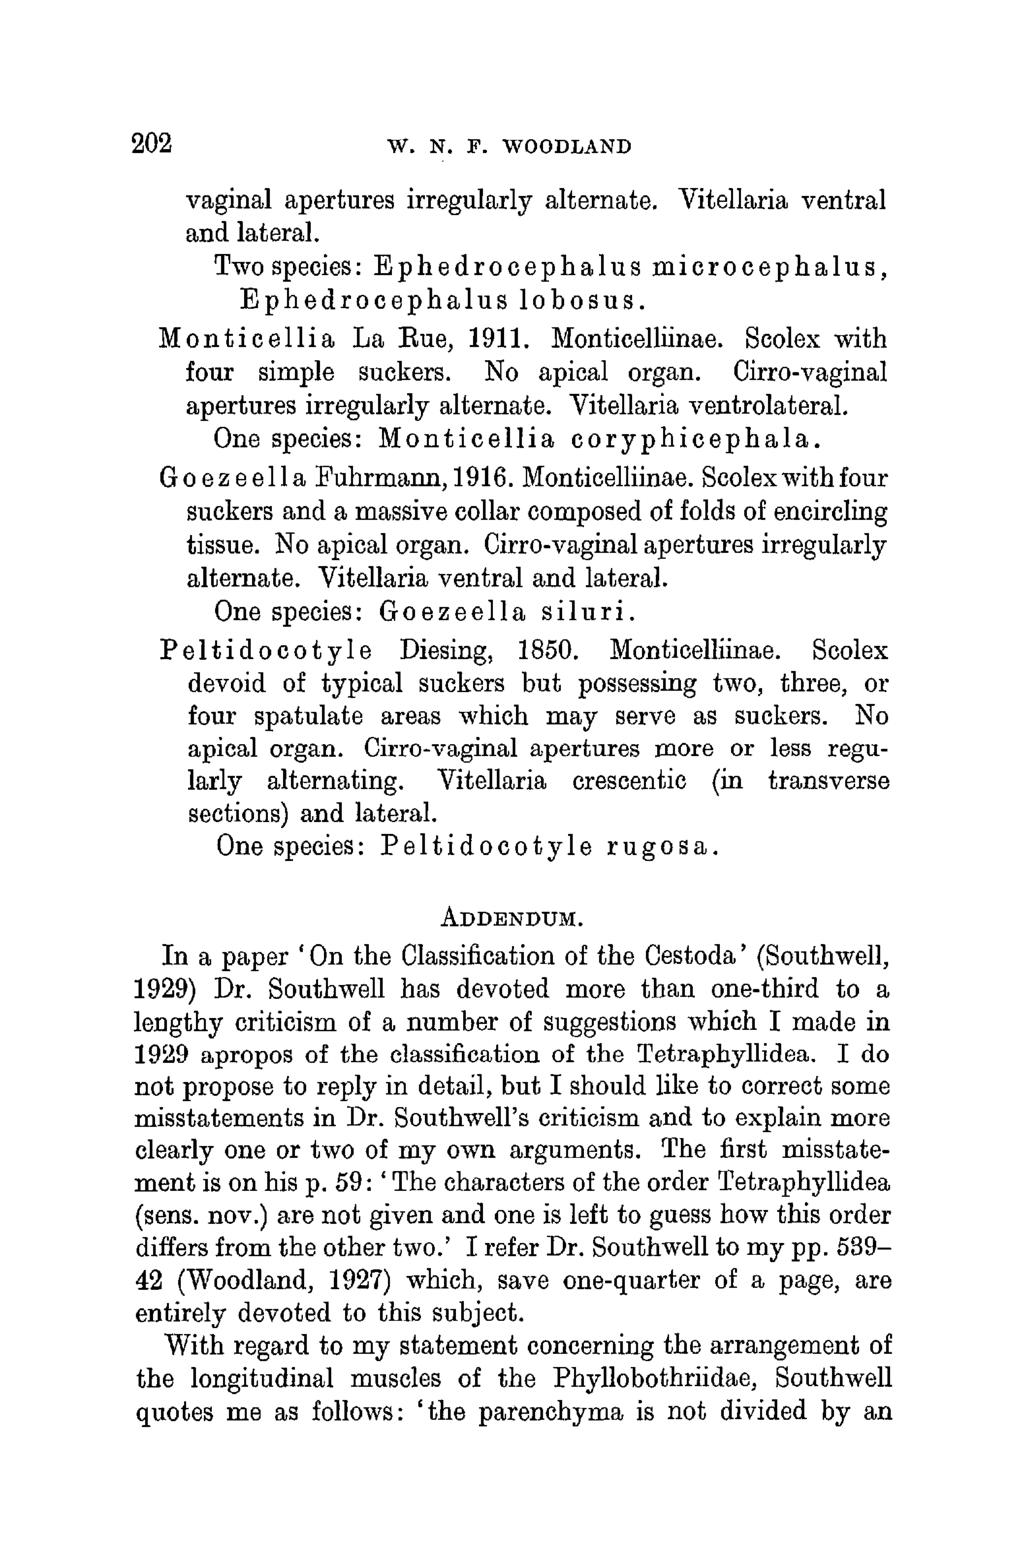 202 W. N. F. WOODLAND vaginal apertures irregularly alternate. Vitellaria ventral and lateral. Two species: Ephedrocephalus microcephalus, Ephedrocephalus lobosus. Monticellia La Bue, 1911.